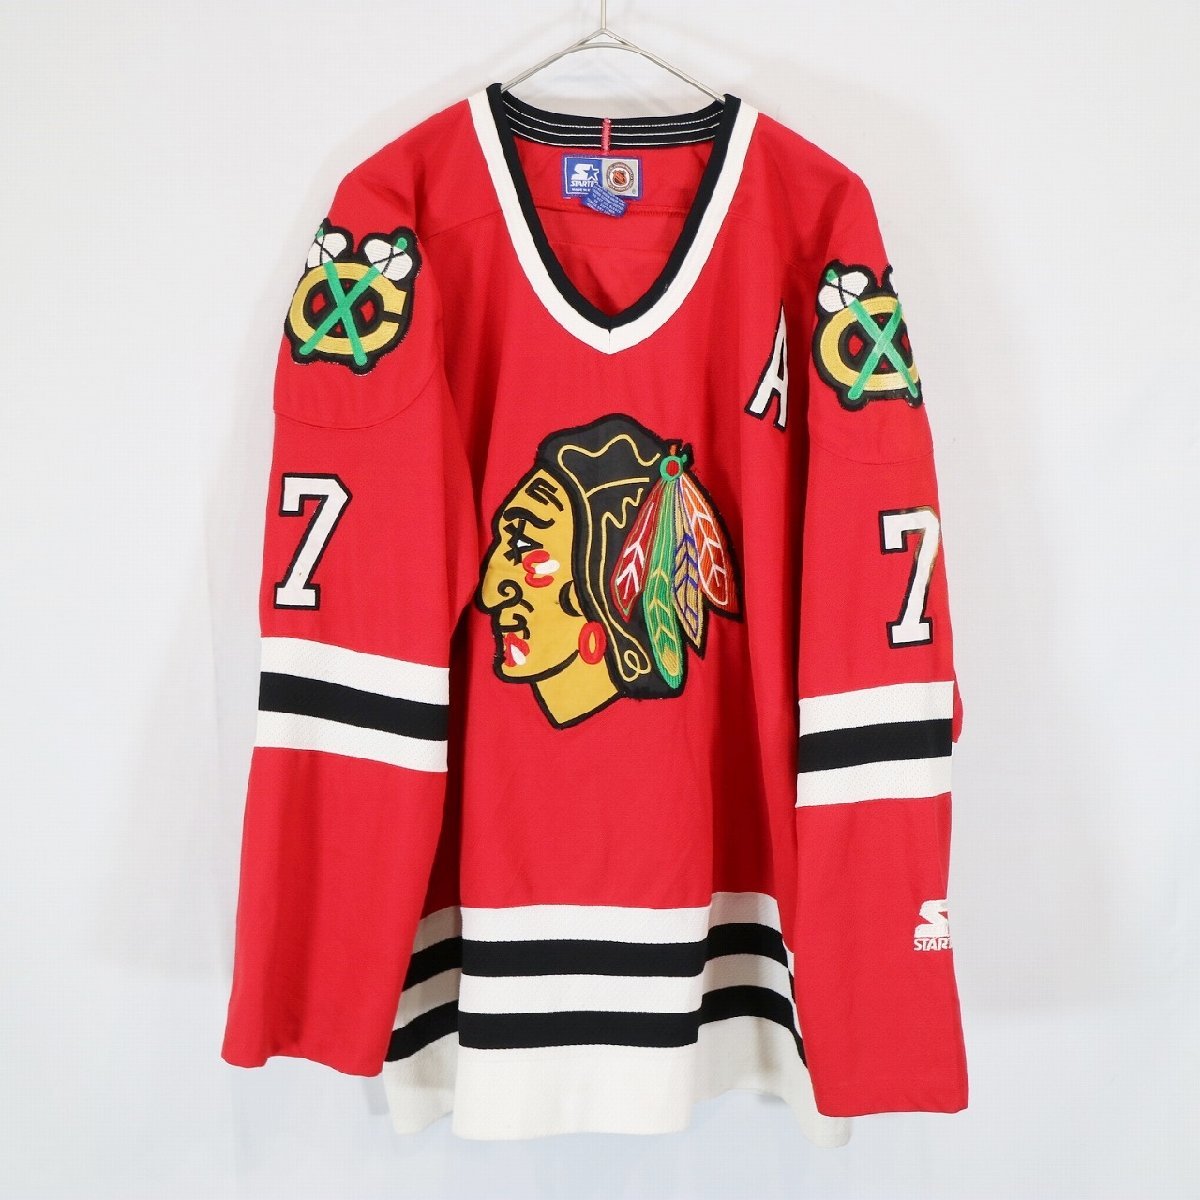 STARTER NHL シカゴ・ブラックホークス 長袖 ゲームシャツ スポーツ アイスホッケー プロチーム レッド ( メンズ XL ) 中古 古着 N3467